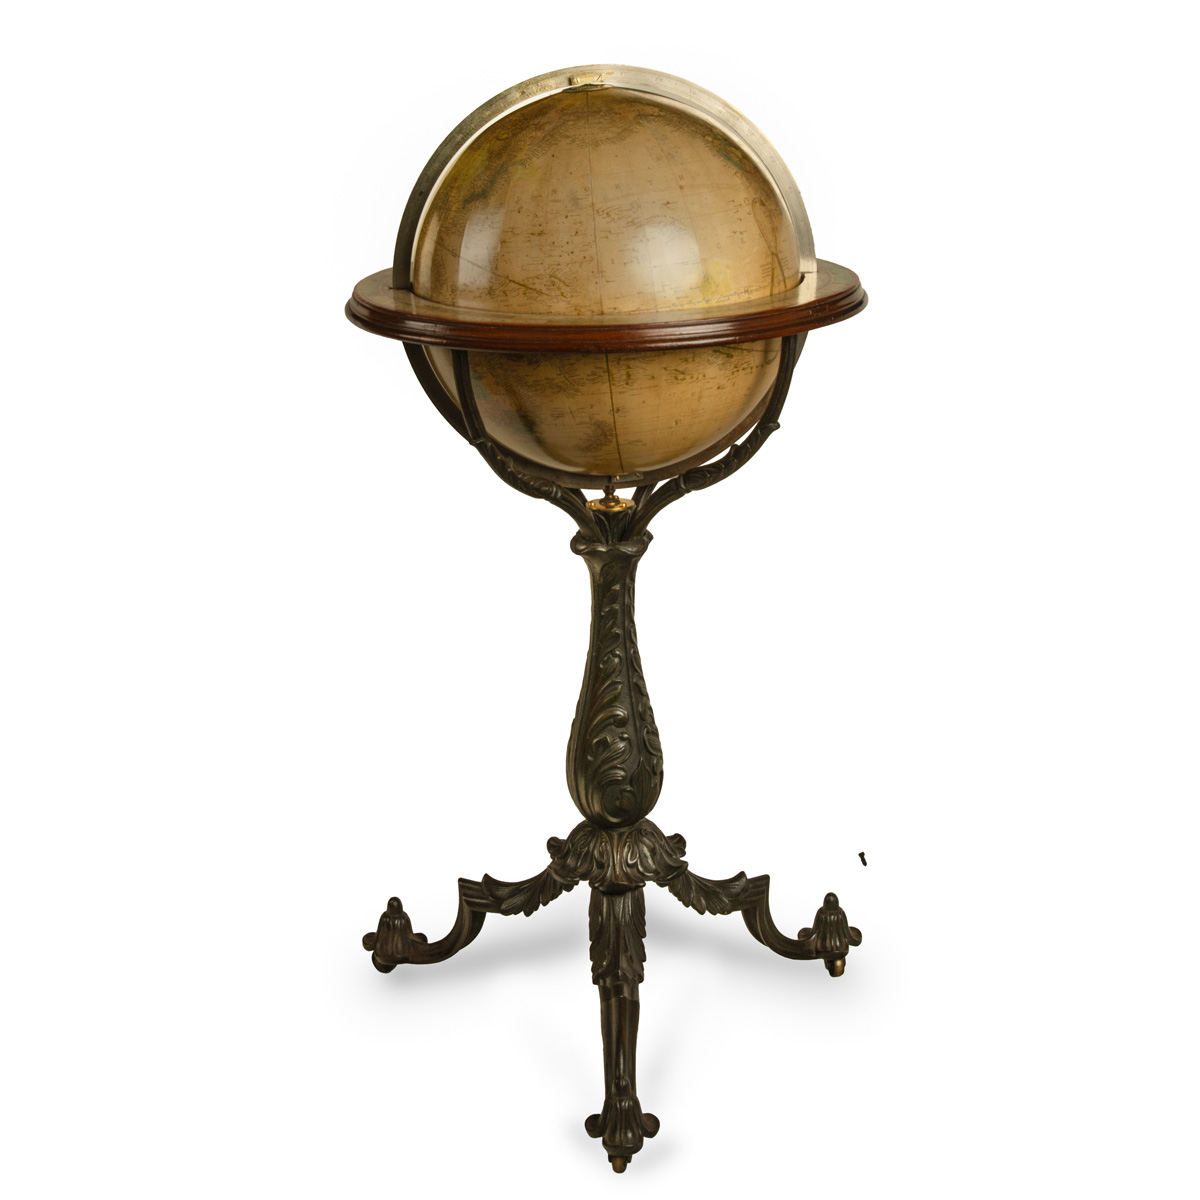 A 15-inch terrestrial floor globe by Nims & Co